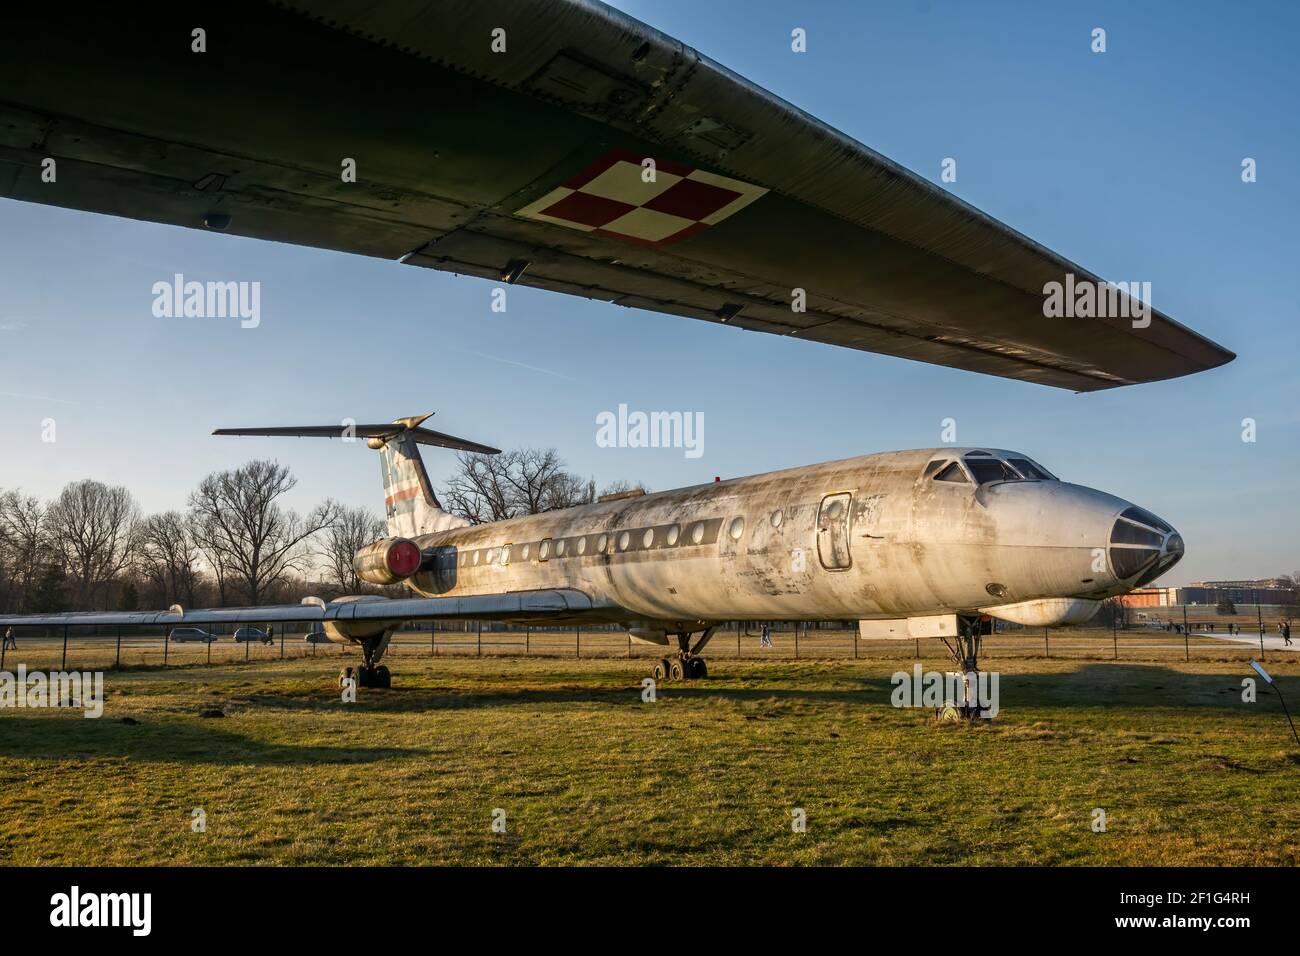 Tupolev tu-134a - Museo de la Aviación Polaca, Cracovia, Polonia, Europa Foto de stock